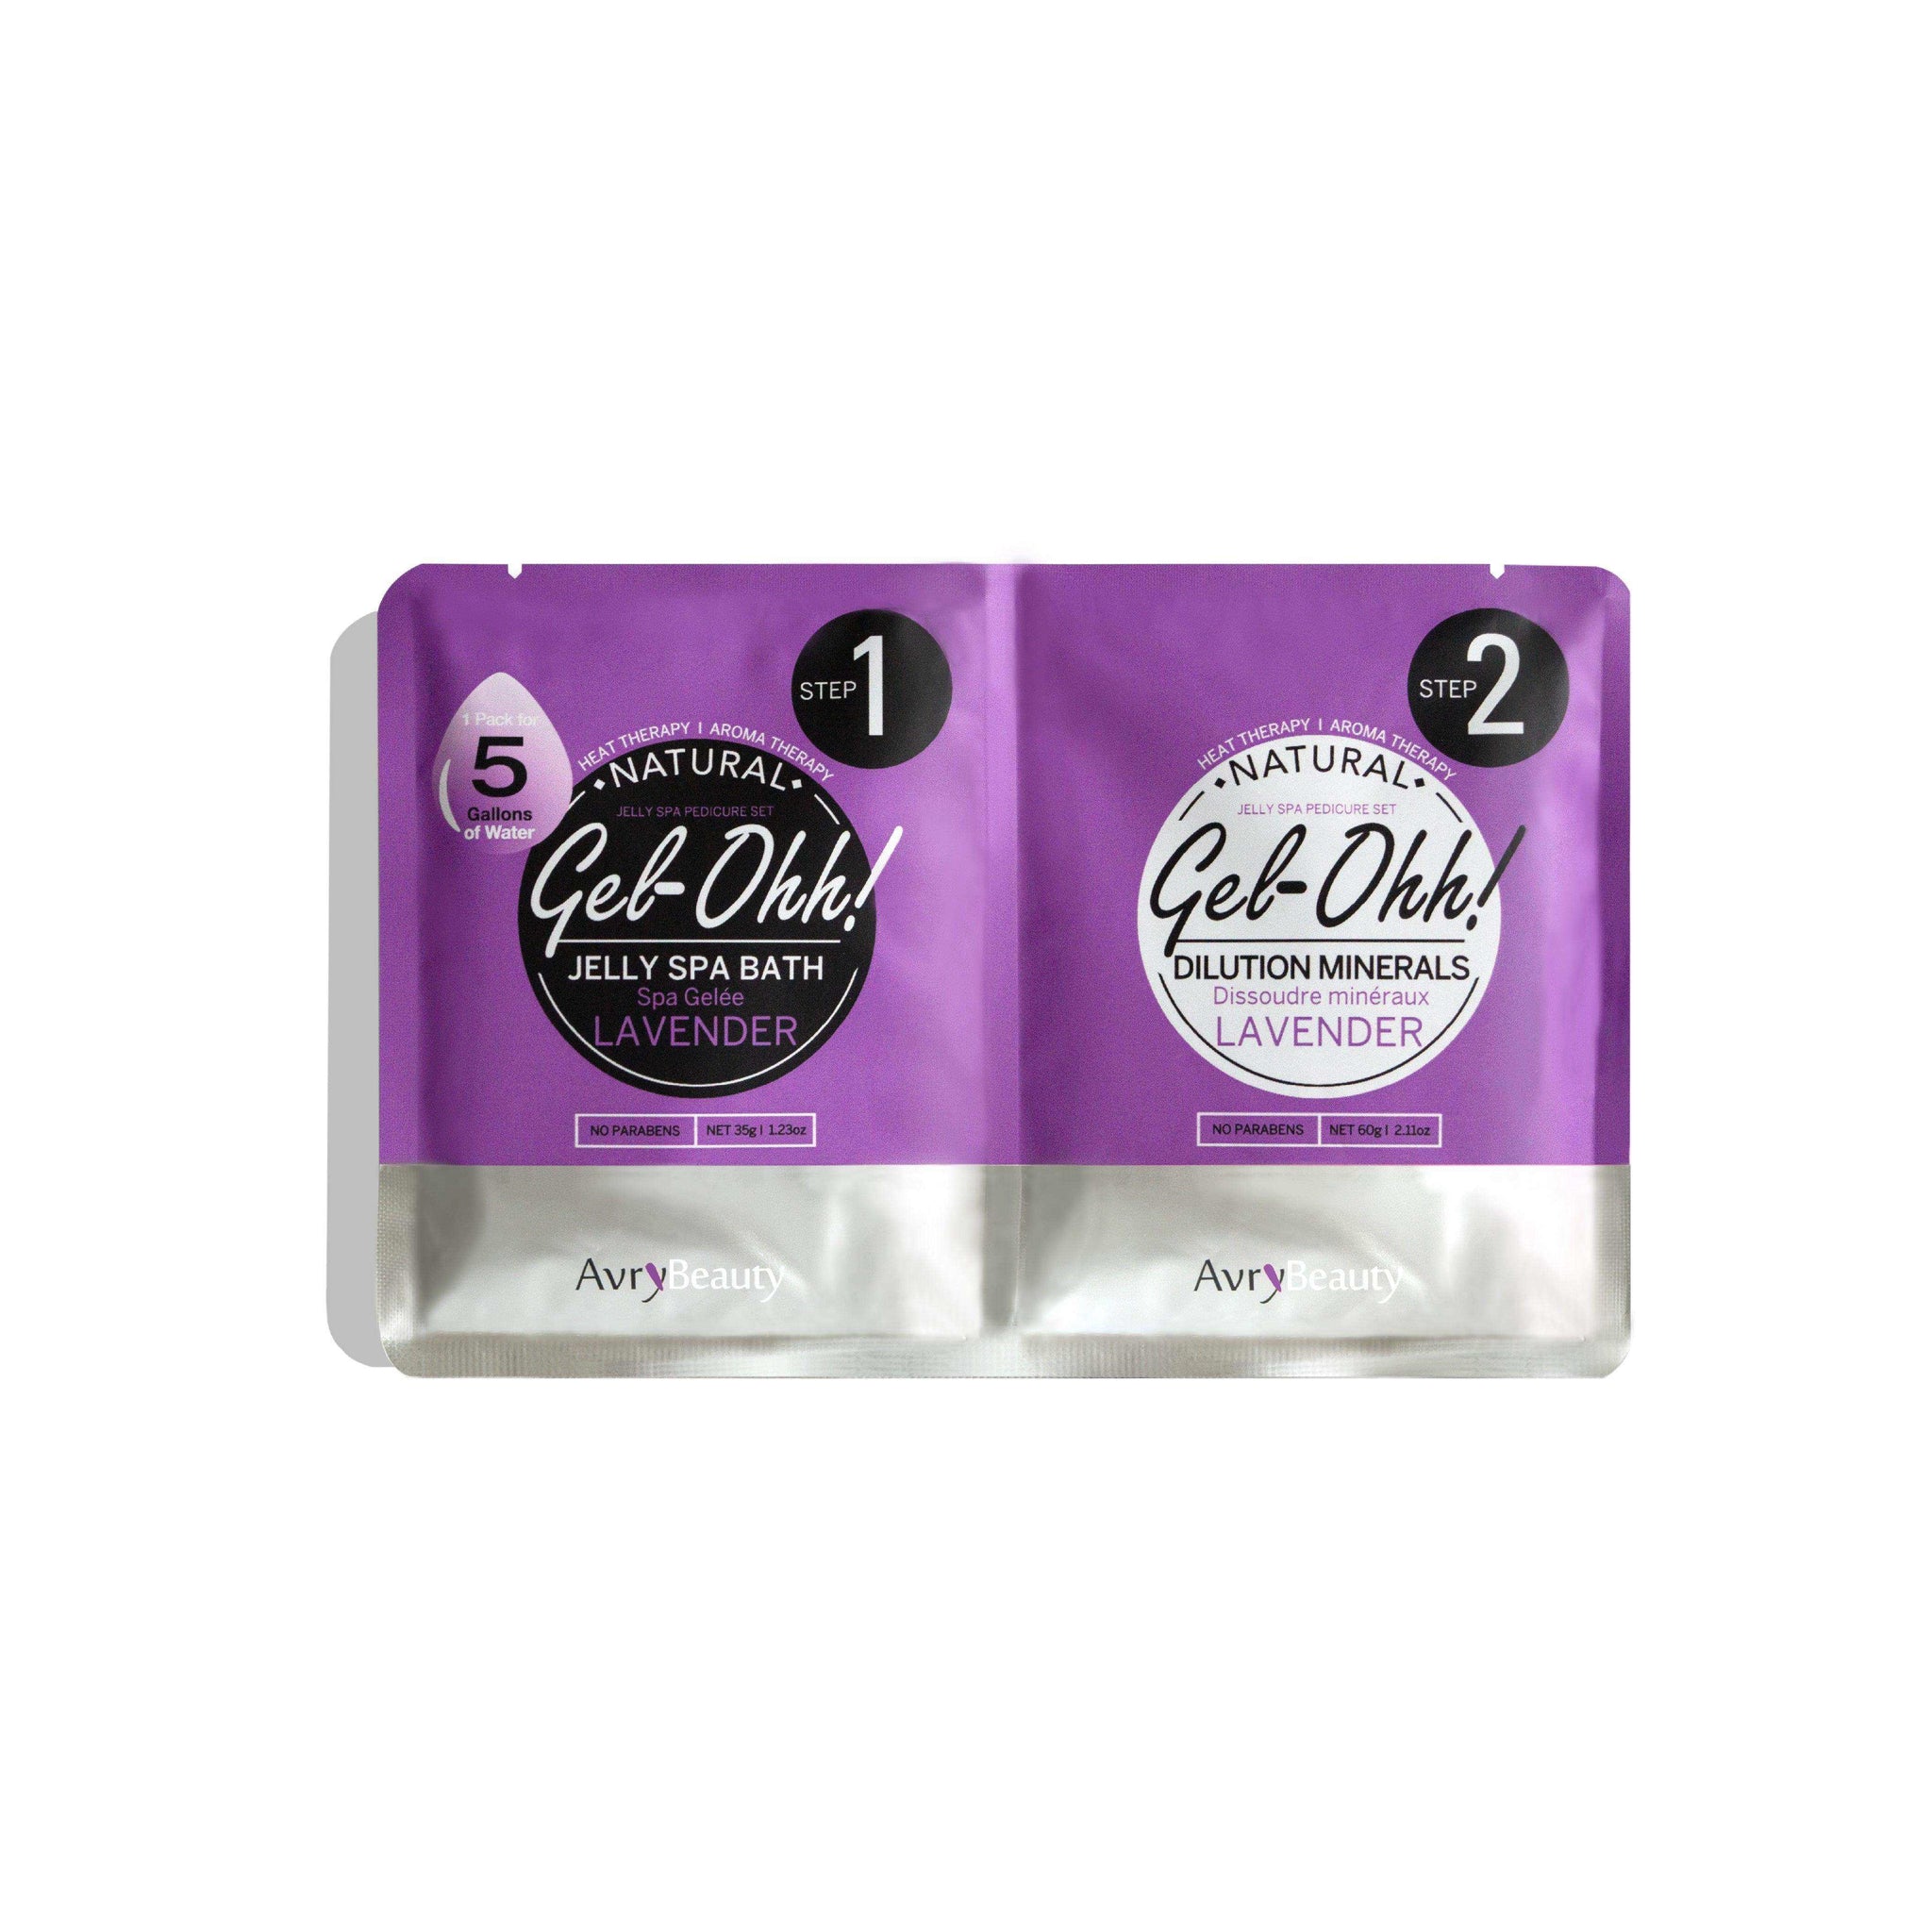 Avry Beauty Gel-Ohh! Jelly Spa Bath - Lavender 1pc